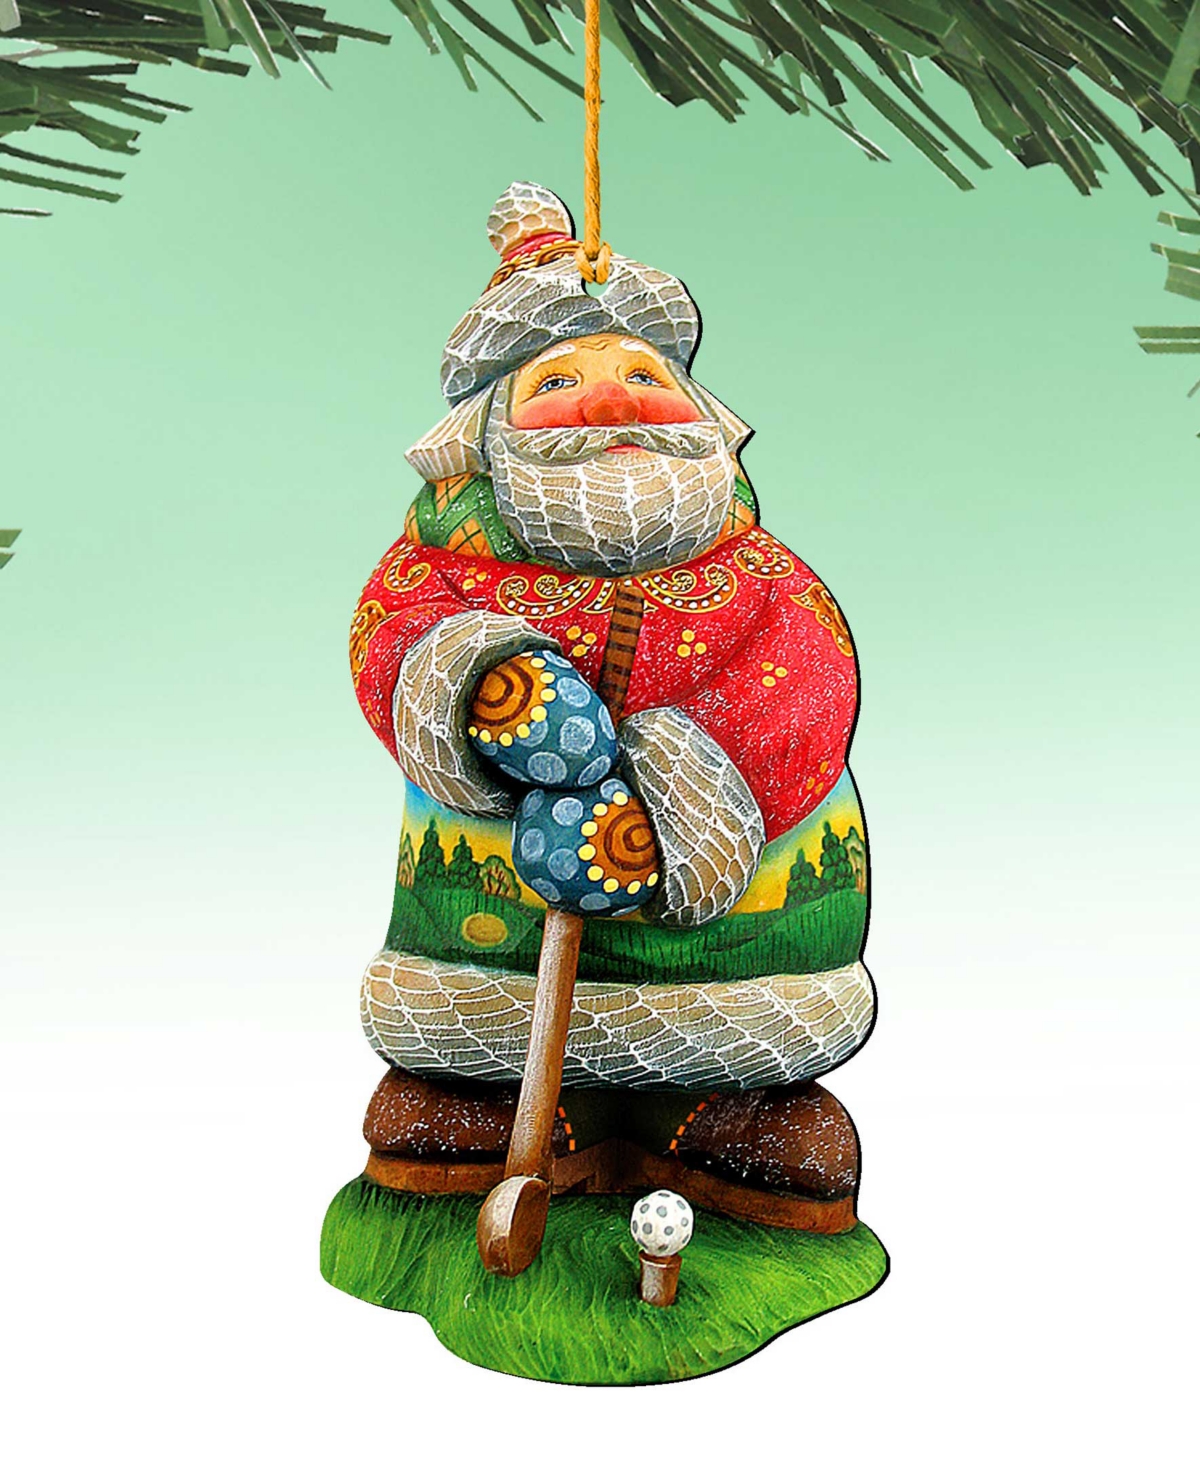 Designocracy Golfer Santa Christmas Wooden Ornaments Holiday Decor Set Of 2 G. Debrekht In Multi Color